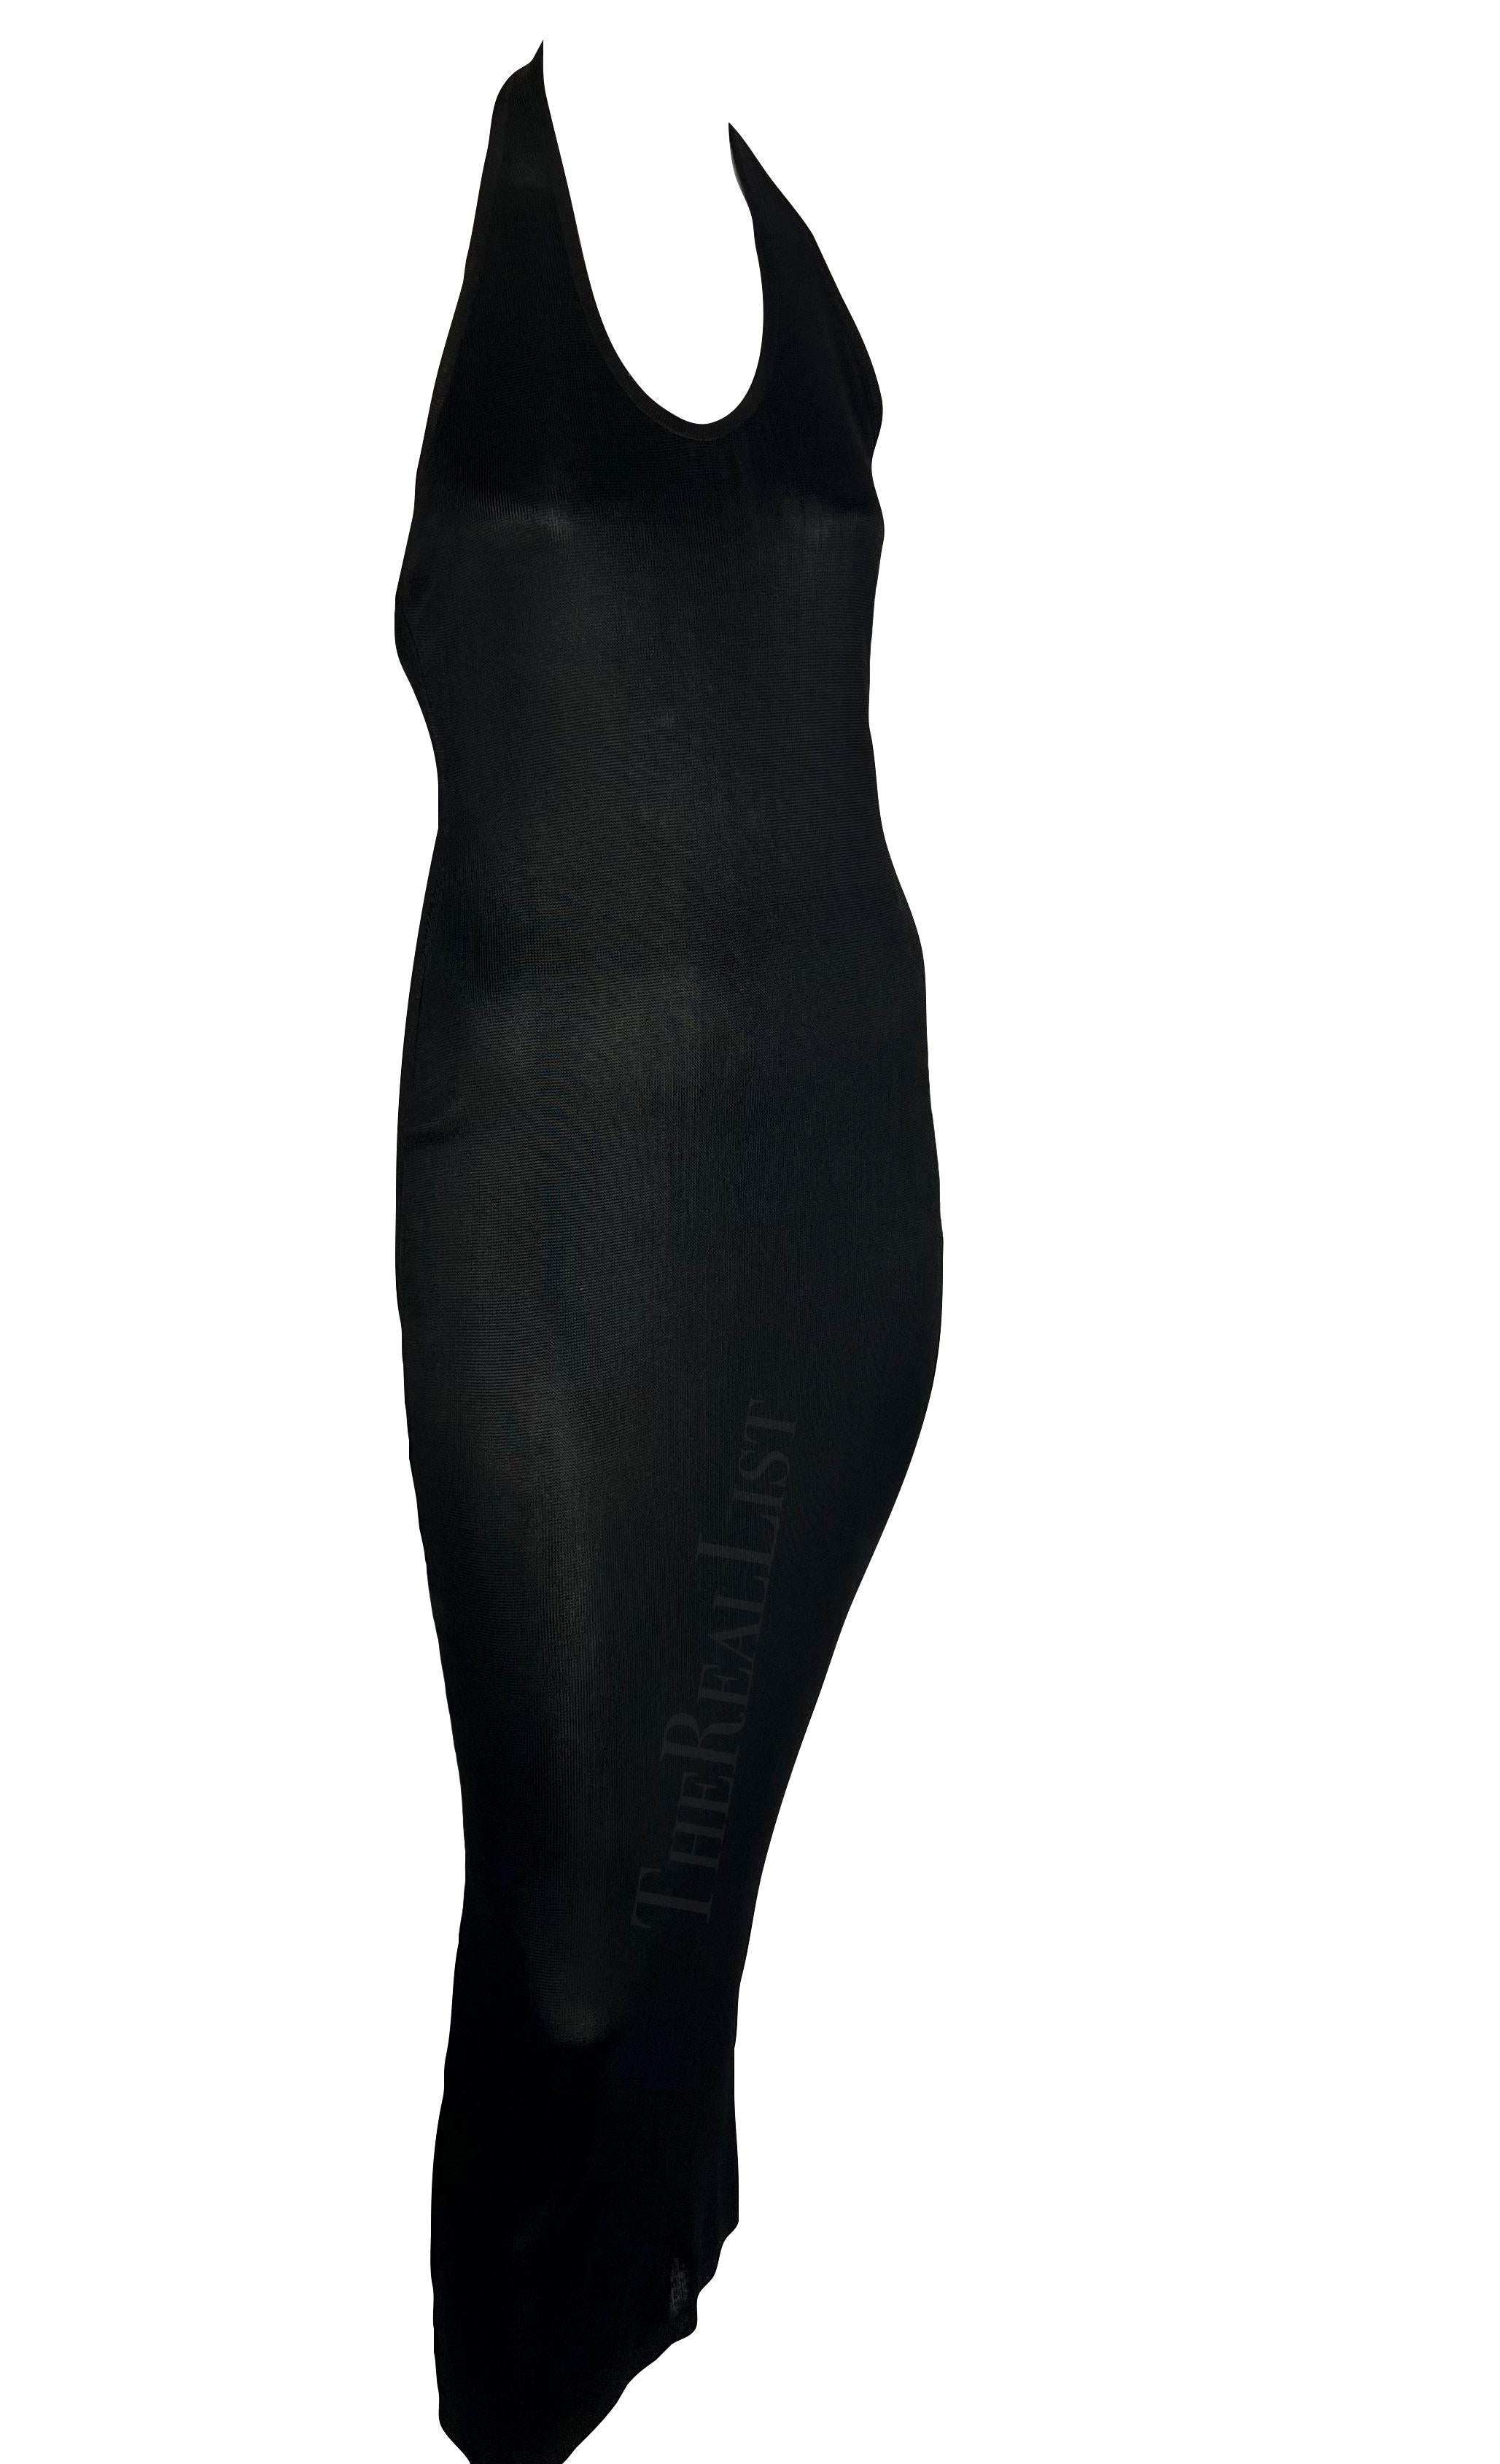 Women's S/S 1986 Azzedine Alaïa Black Knit Halter Neck Bodycon Backless Dress For Sale